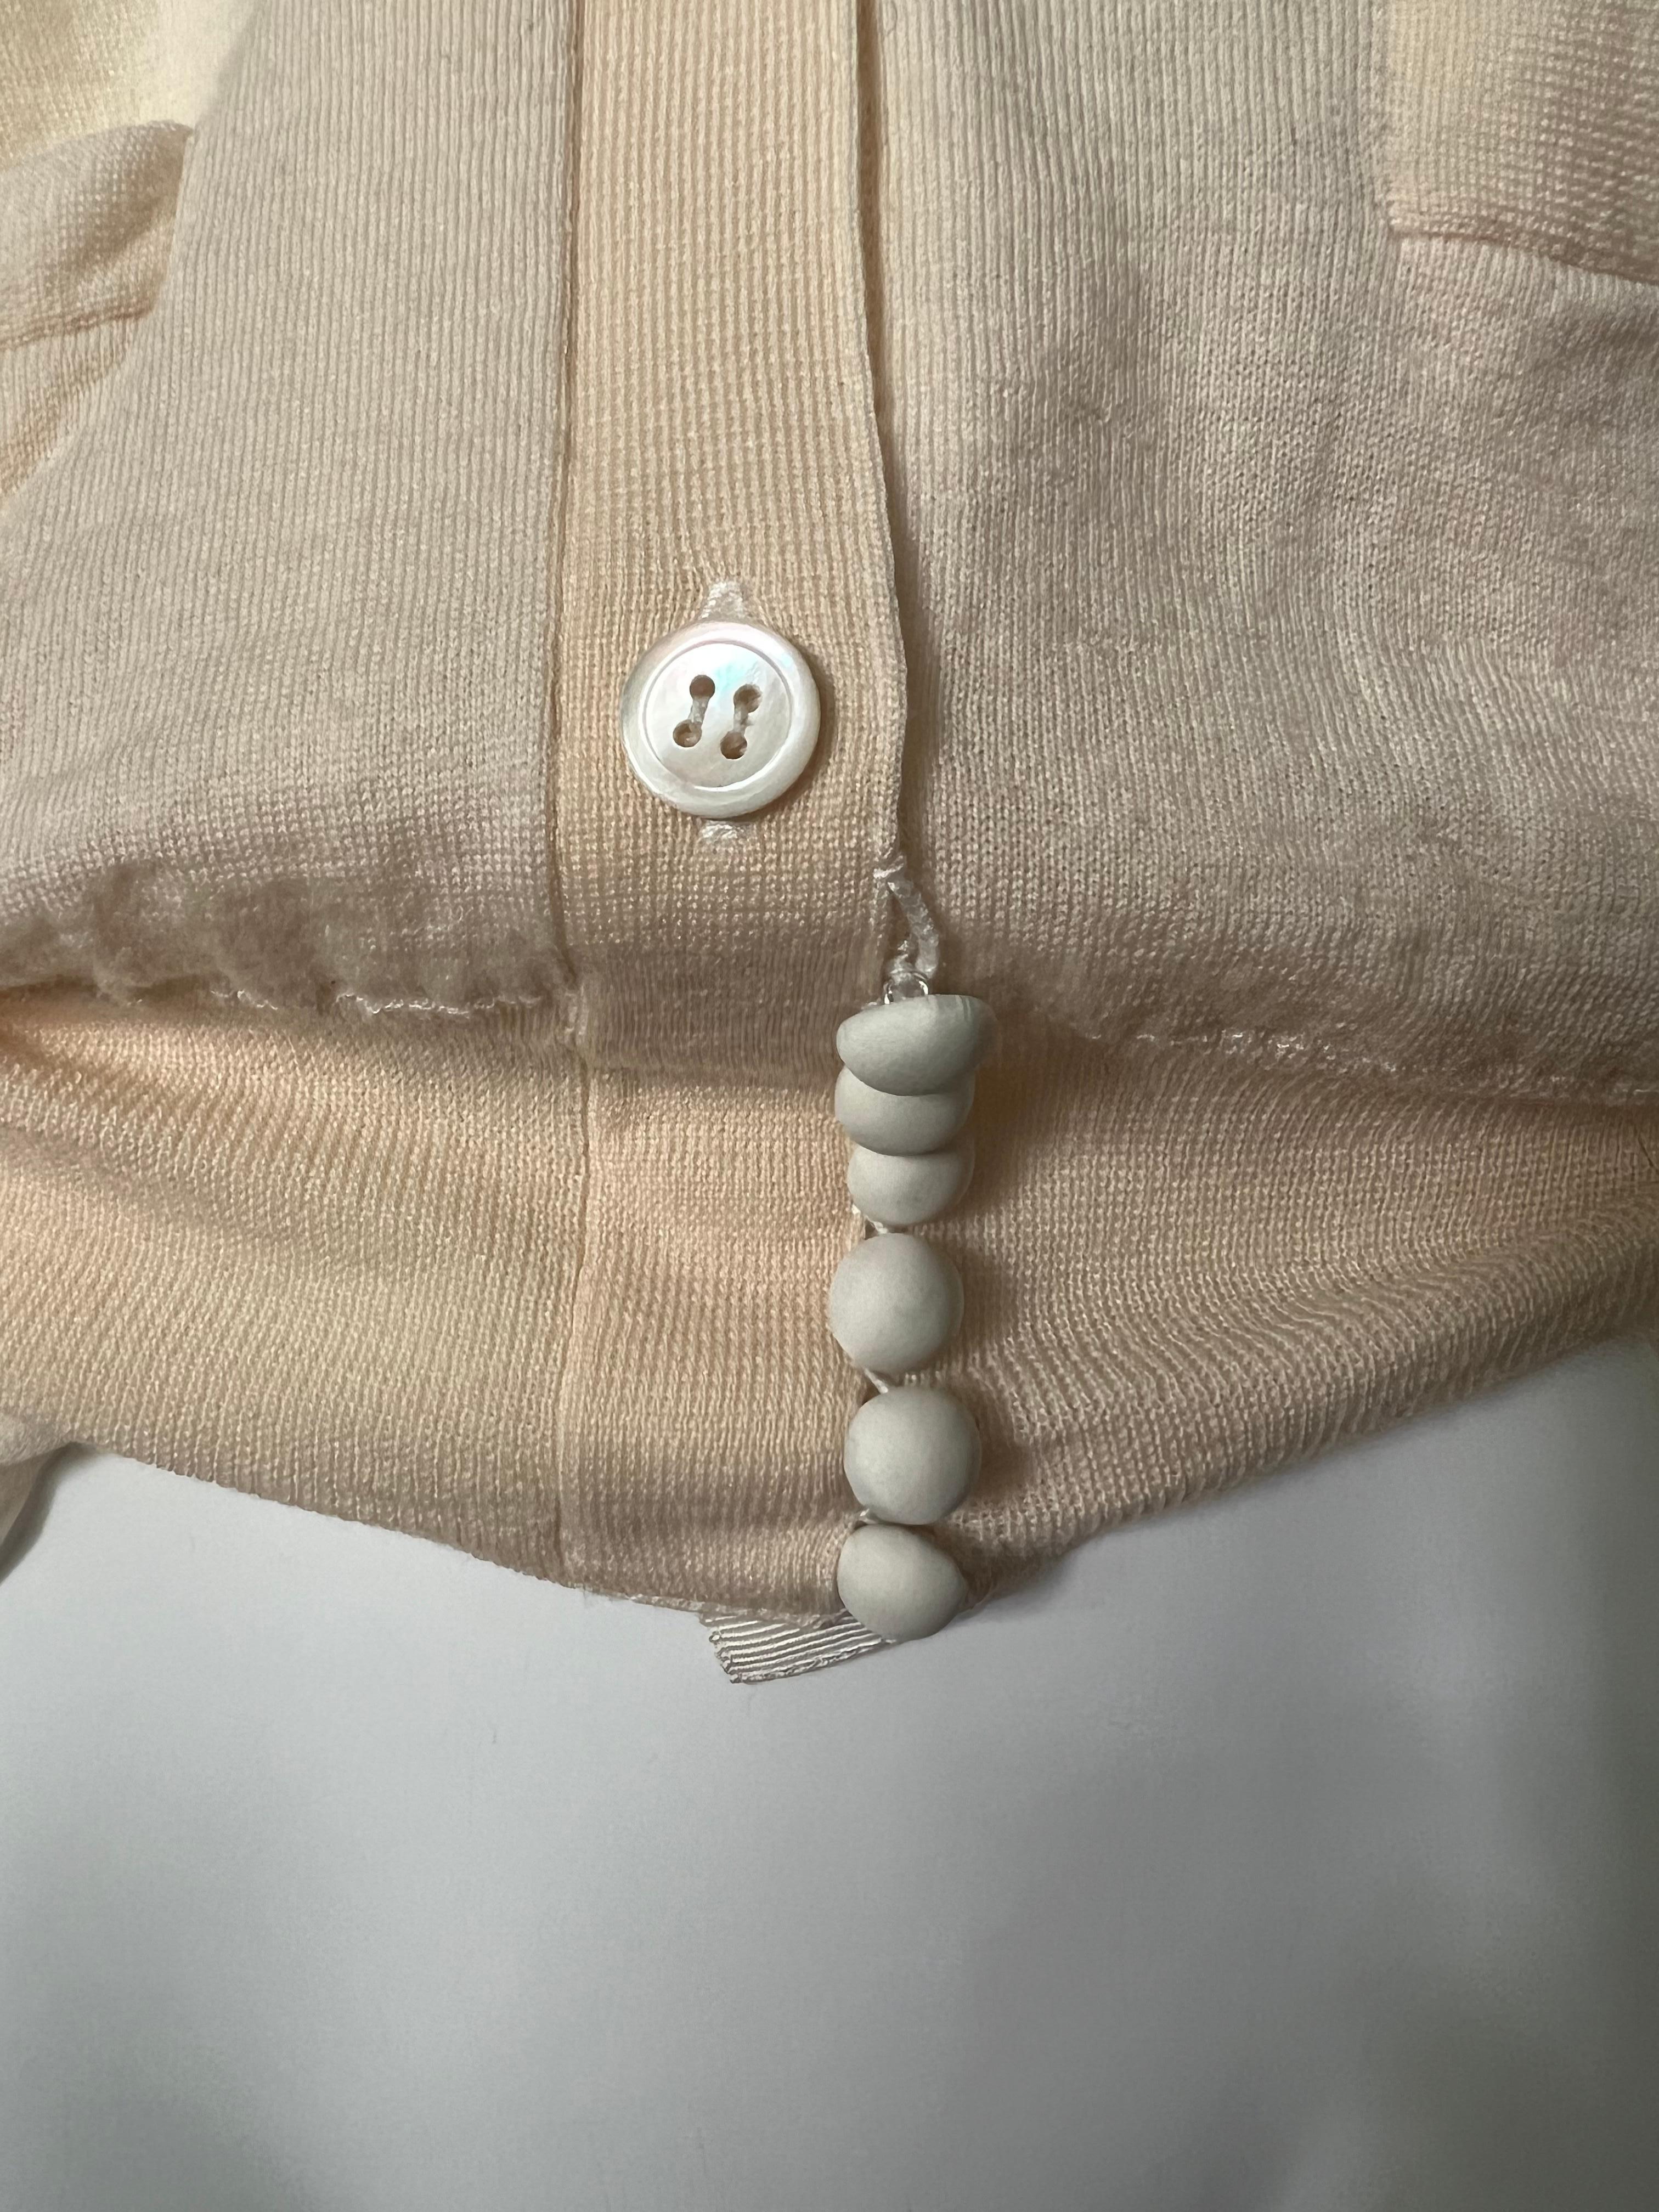 - V neckline
- Front button closure
- Front pockets 
- Ruffled design detail